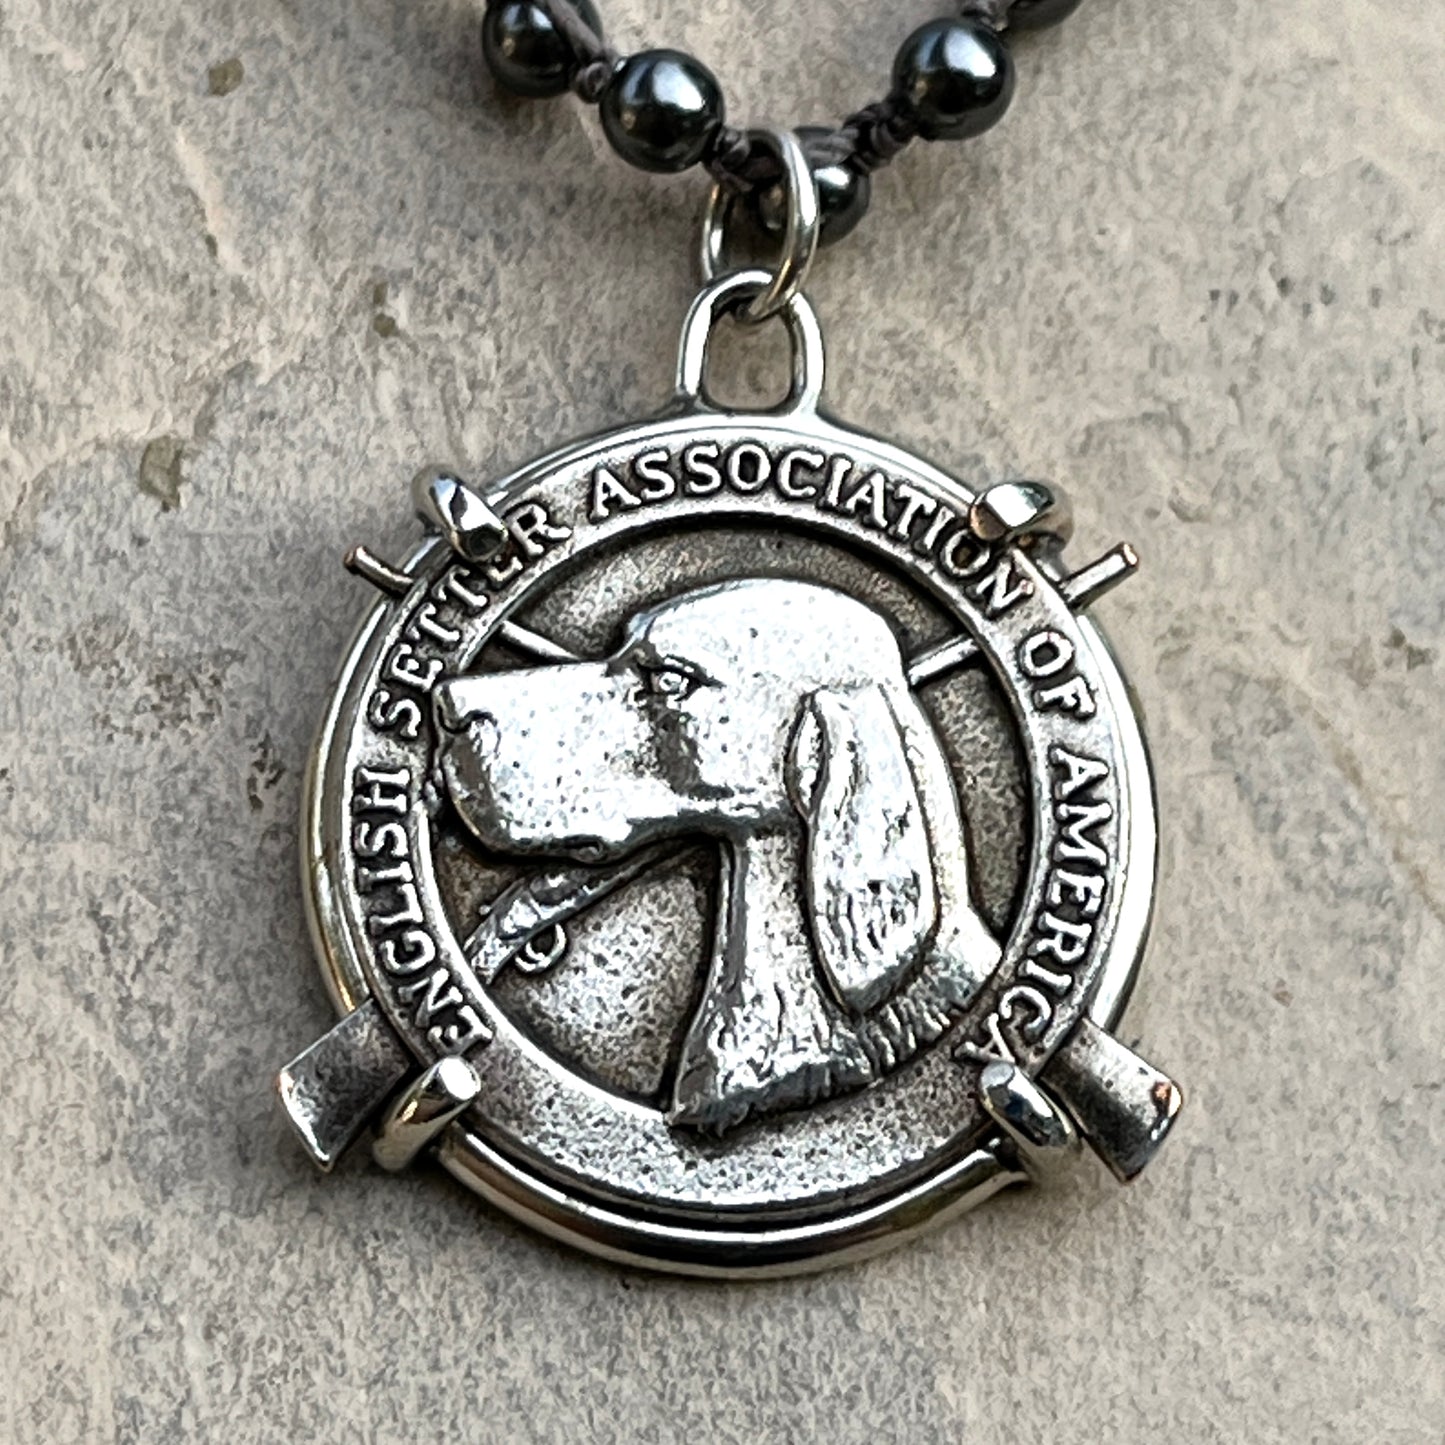 English Setter Dog Medal Necklace